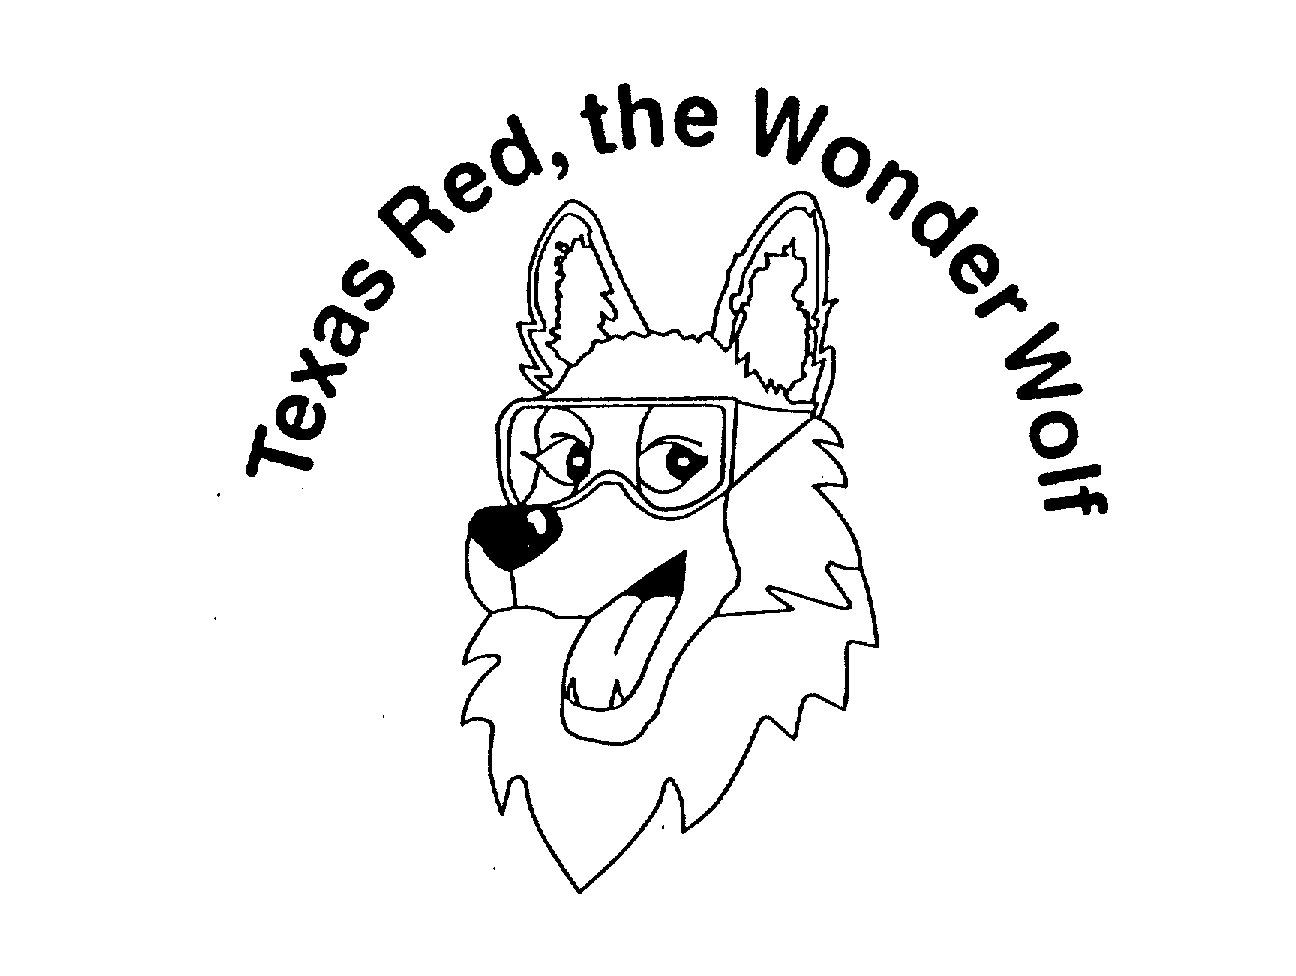  TEXAS RED, THE WONDER WOLF